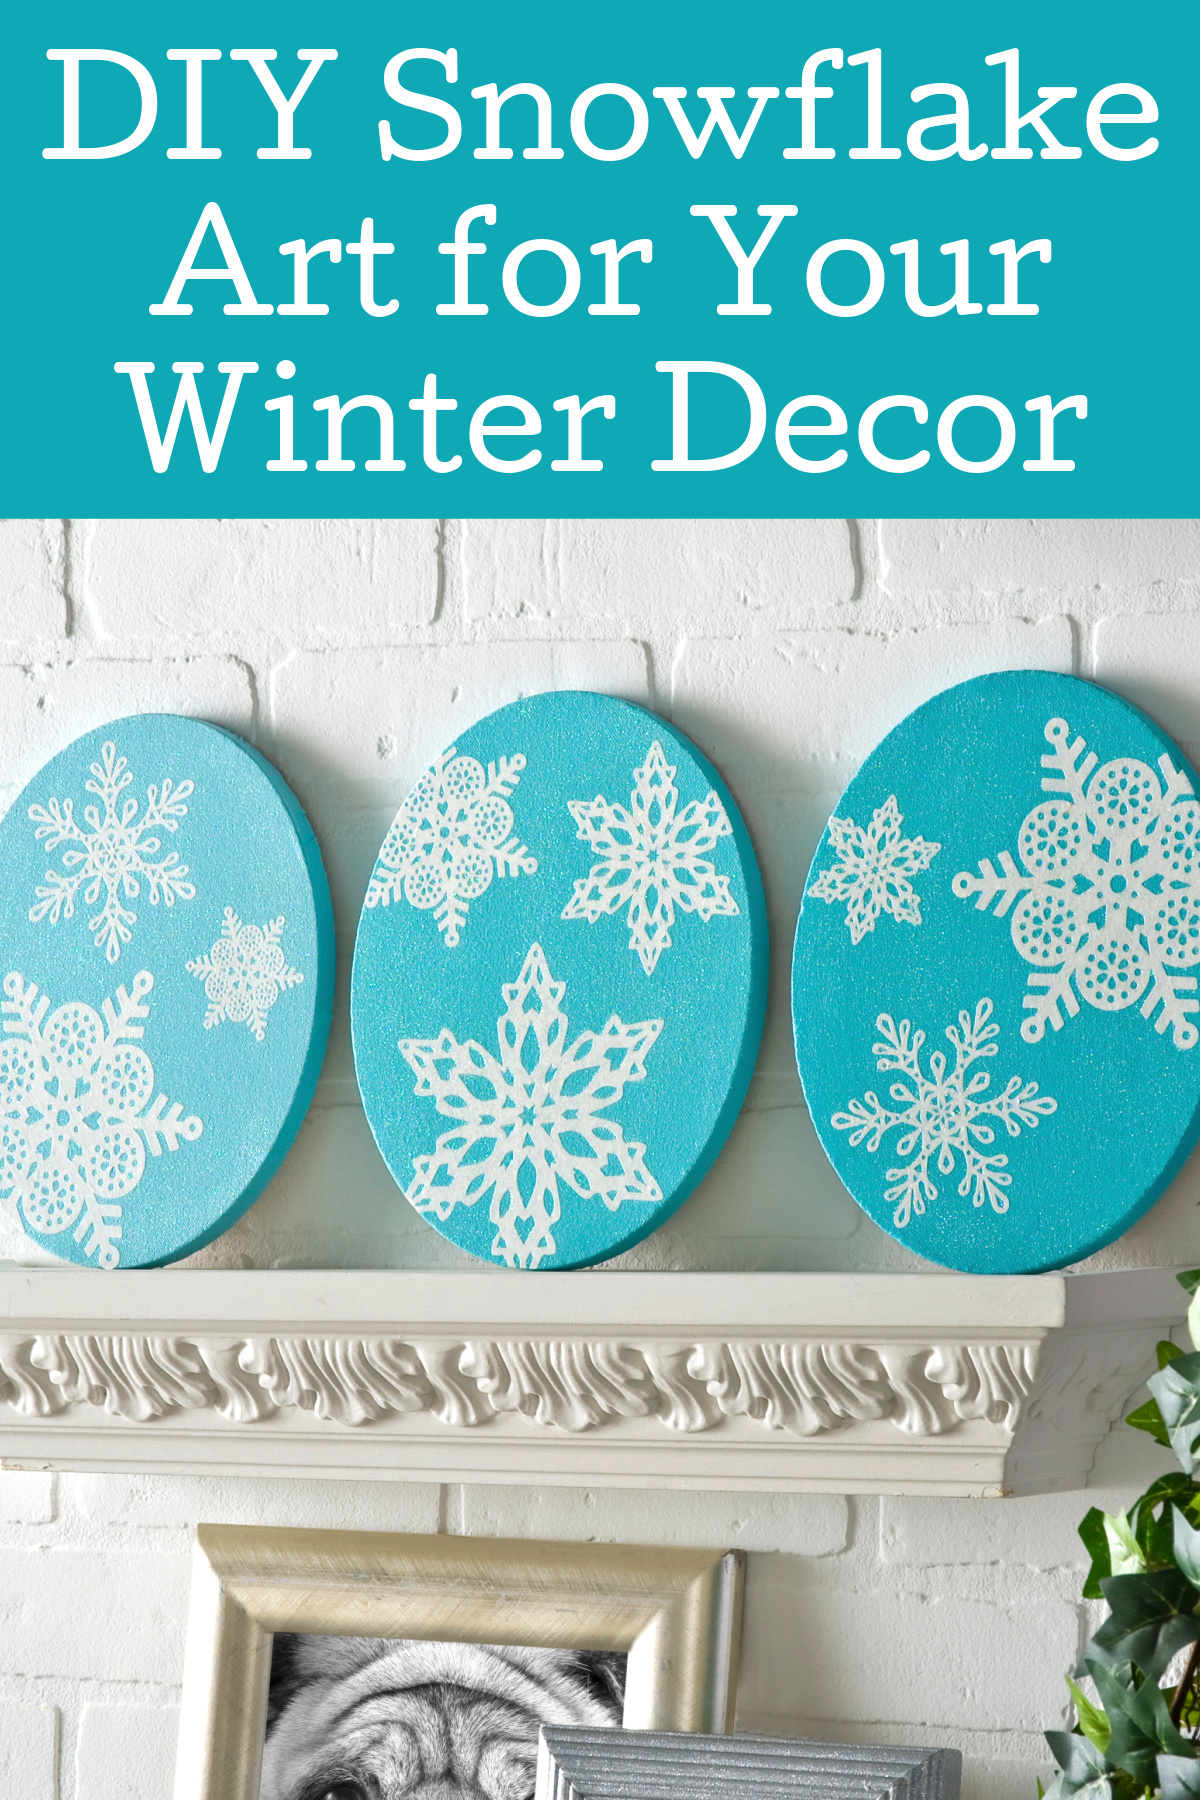 DIY Snowflake Art for Your Winter Decor